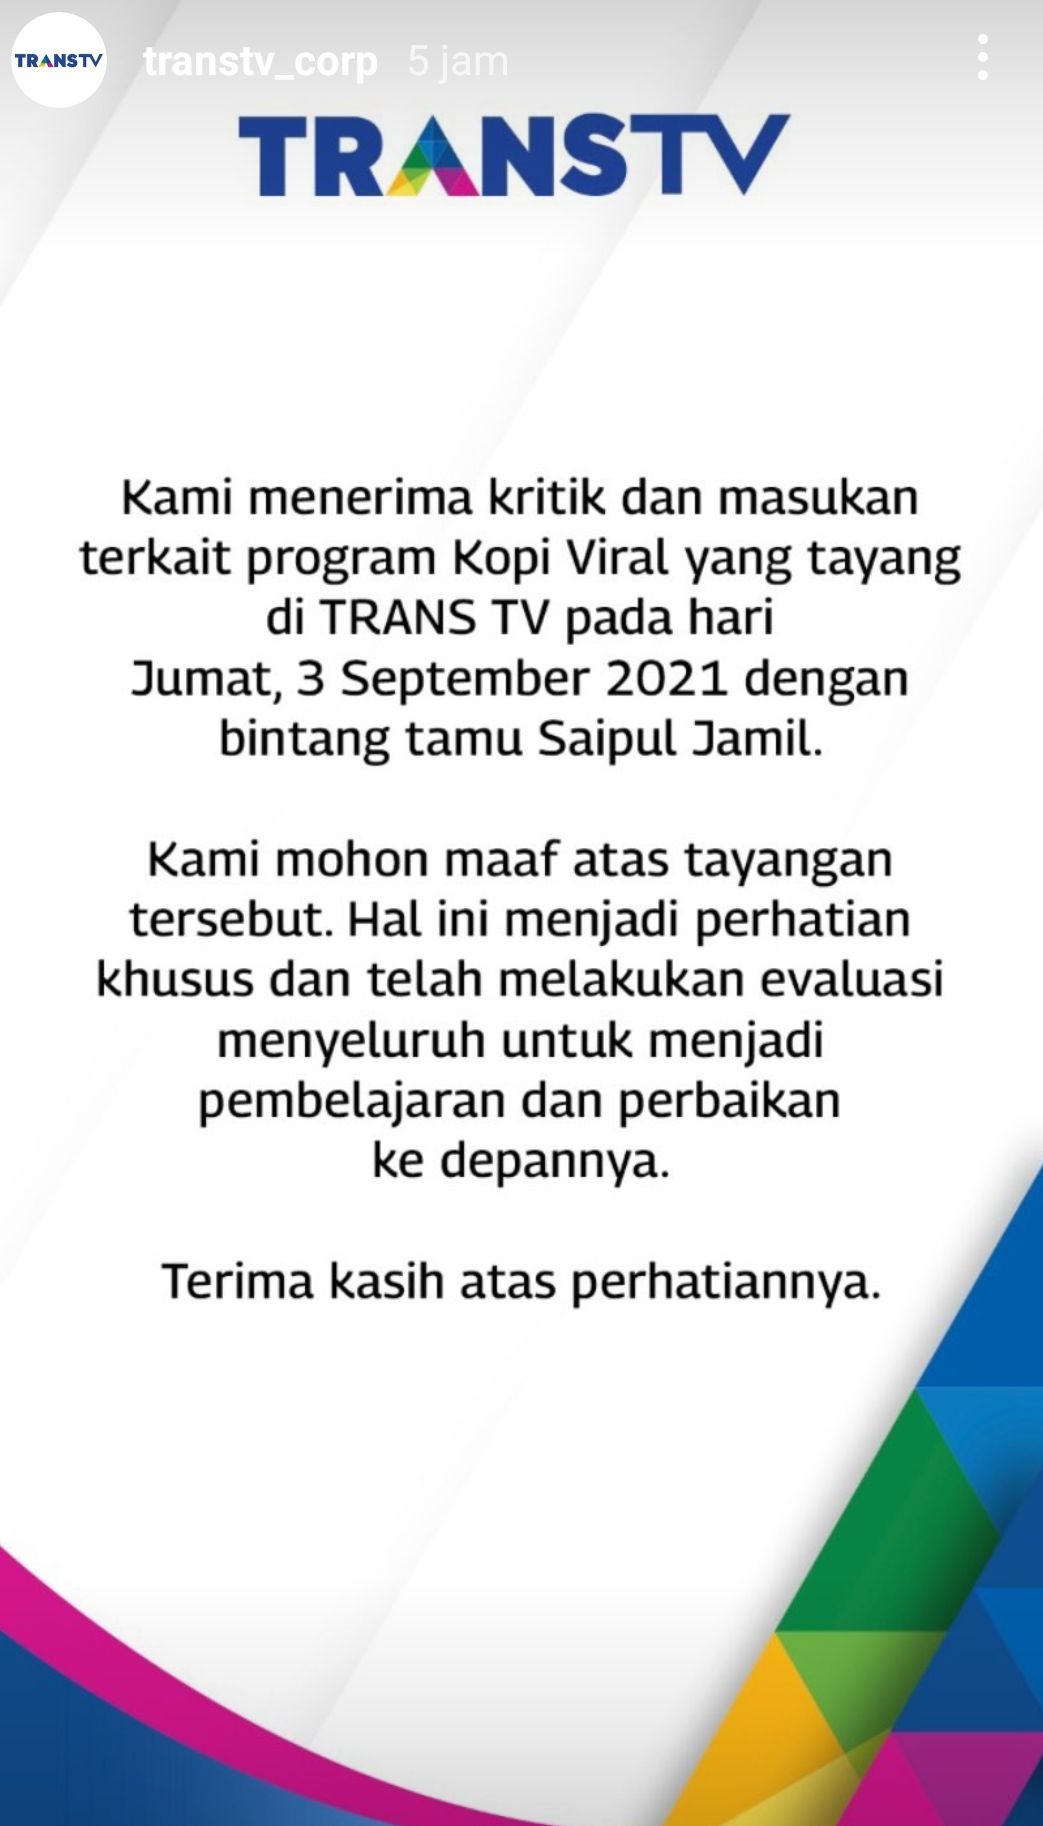 Tangakapan layar permohonan maaf Trans TV tentang hadirnya Saipul Jamil di acara Kopi Viral